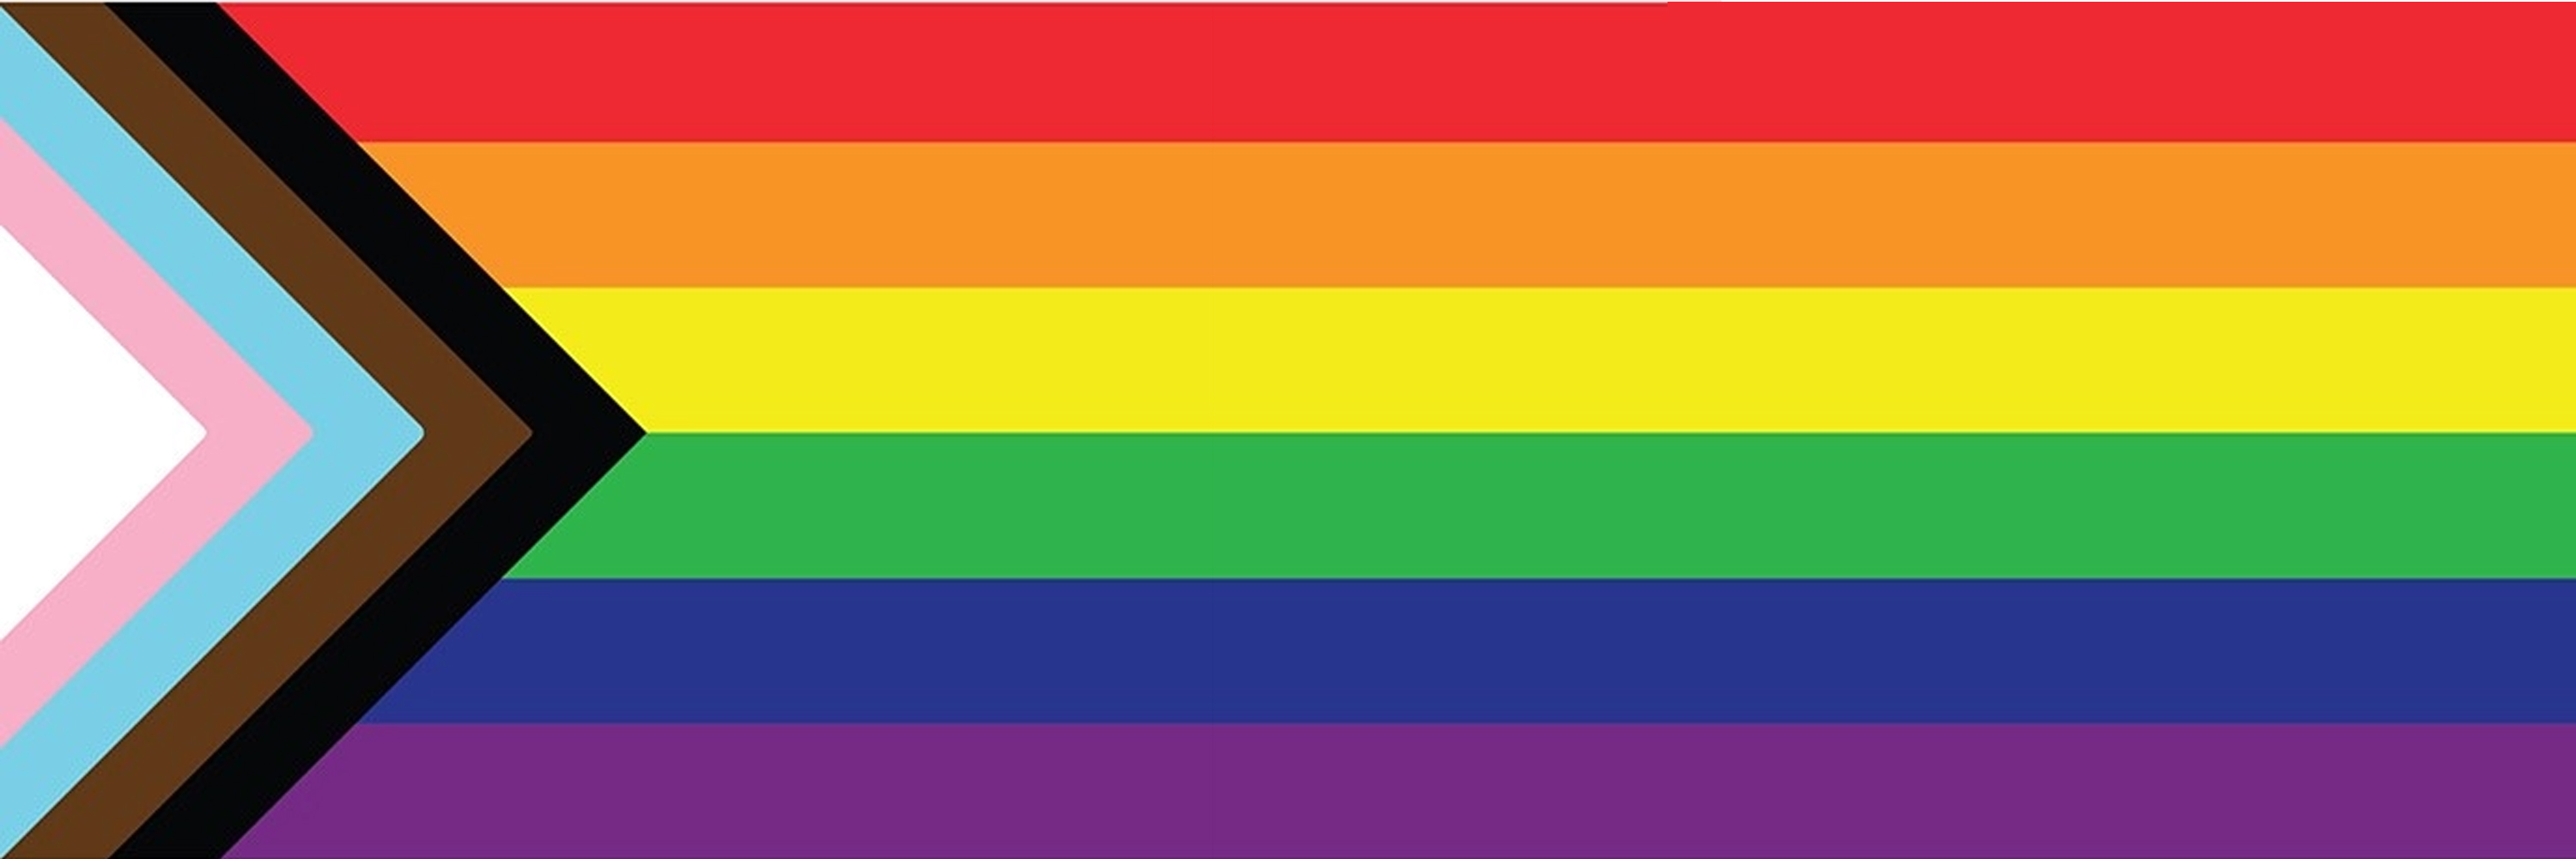 Progressive Pride Flag 3 To 1 Ratio (1)